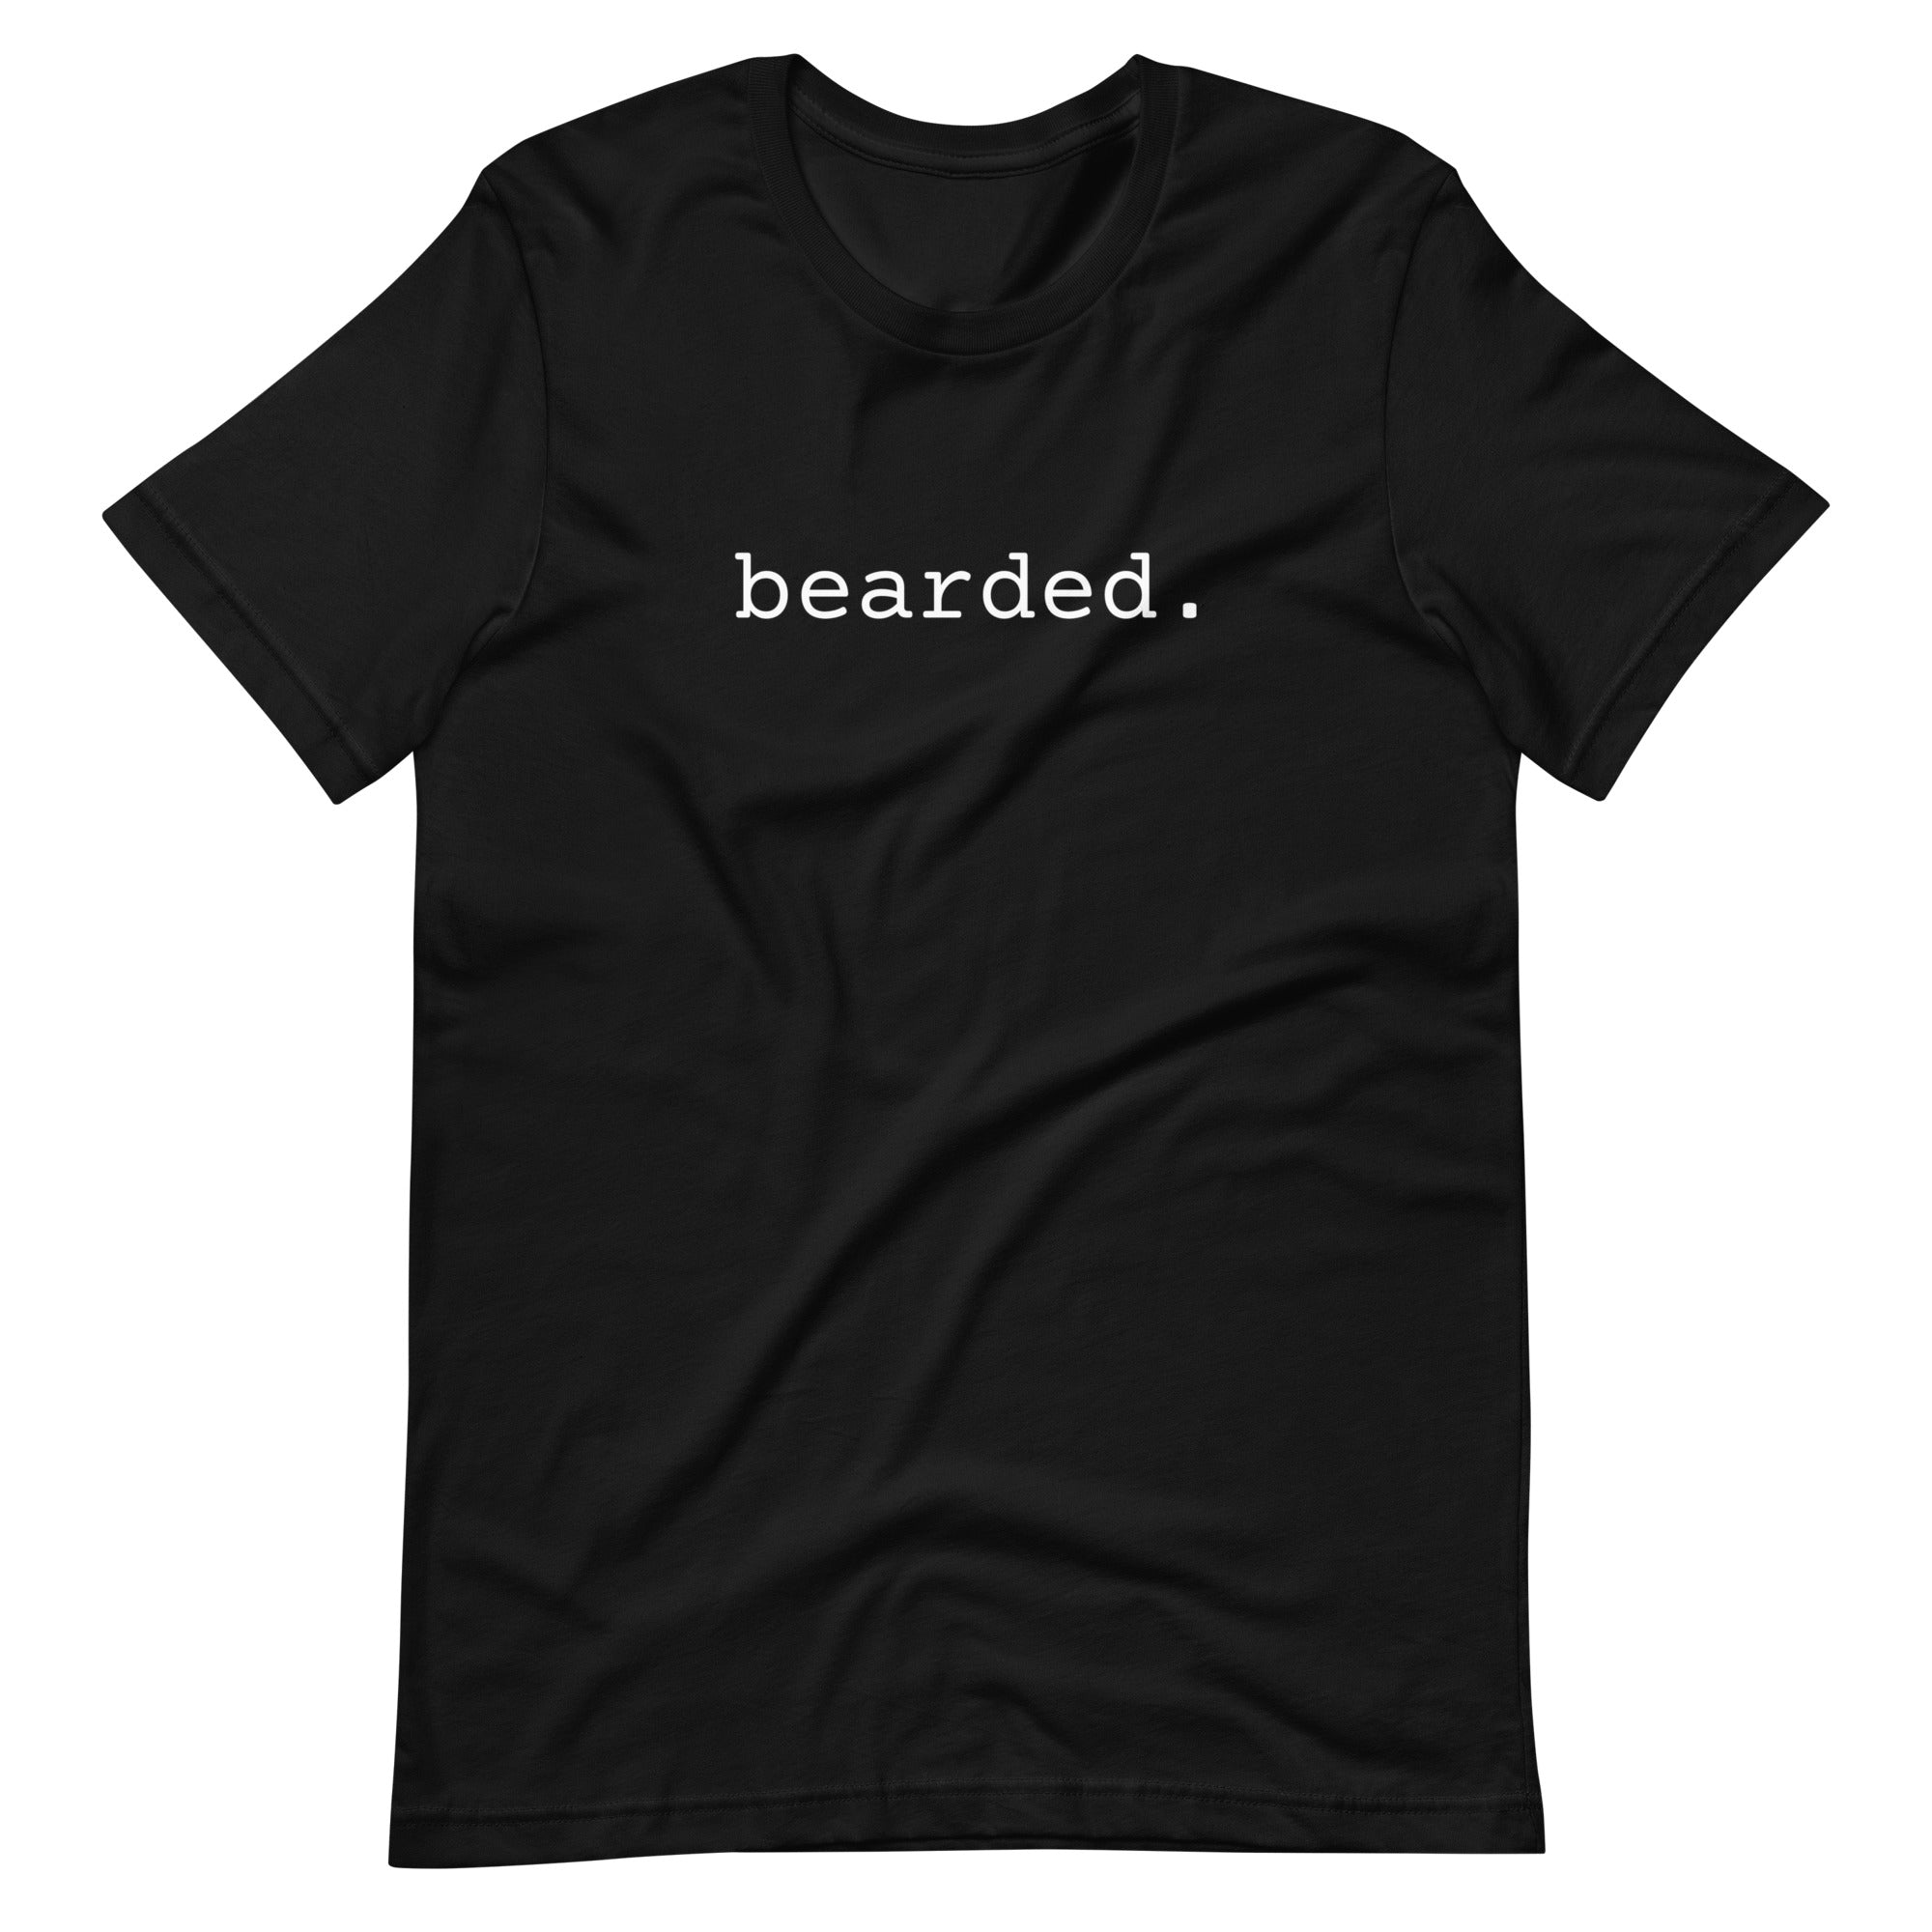 The bearded. T-Shirt - Beard Swag